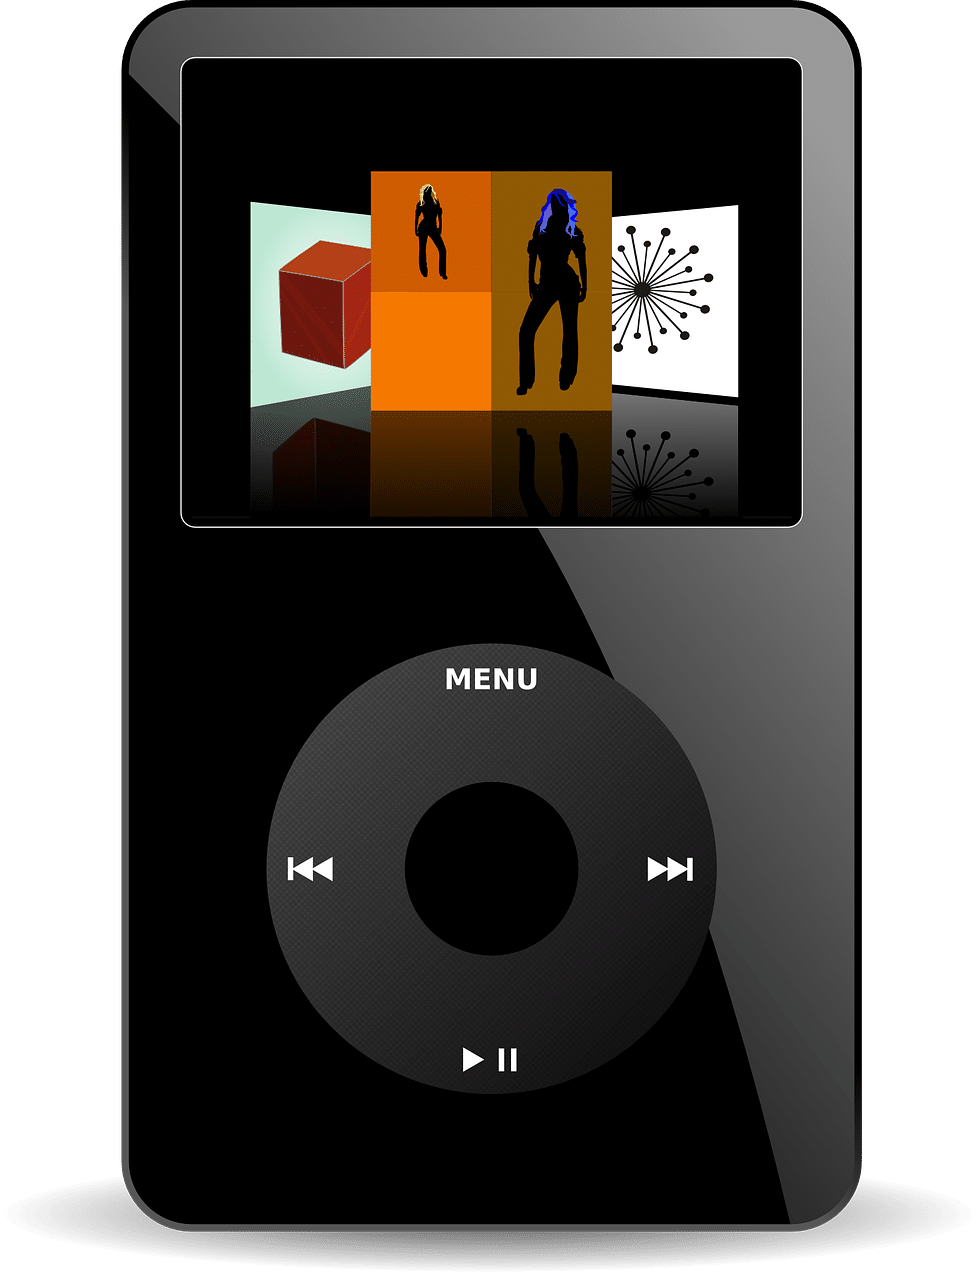 Ejemplo de estrategia de océano azul - iPod de Apple